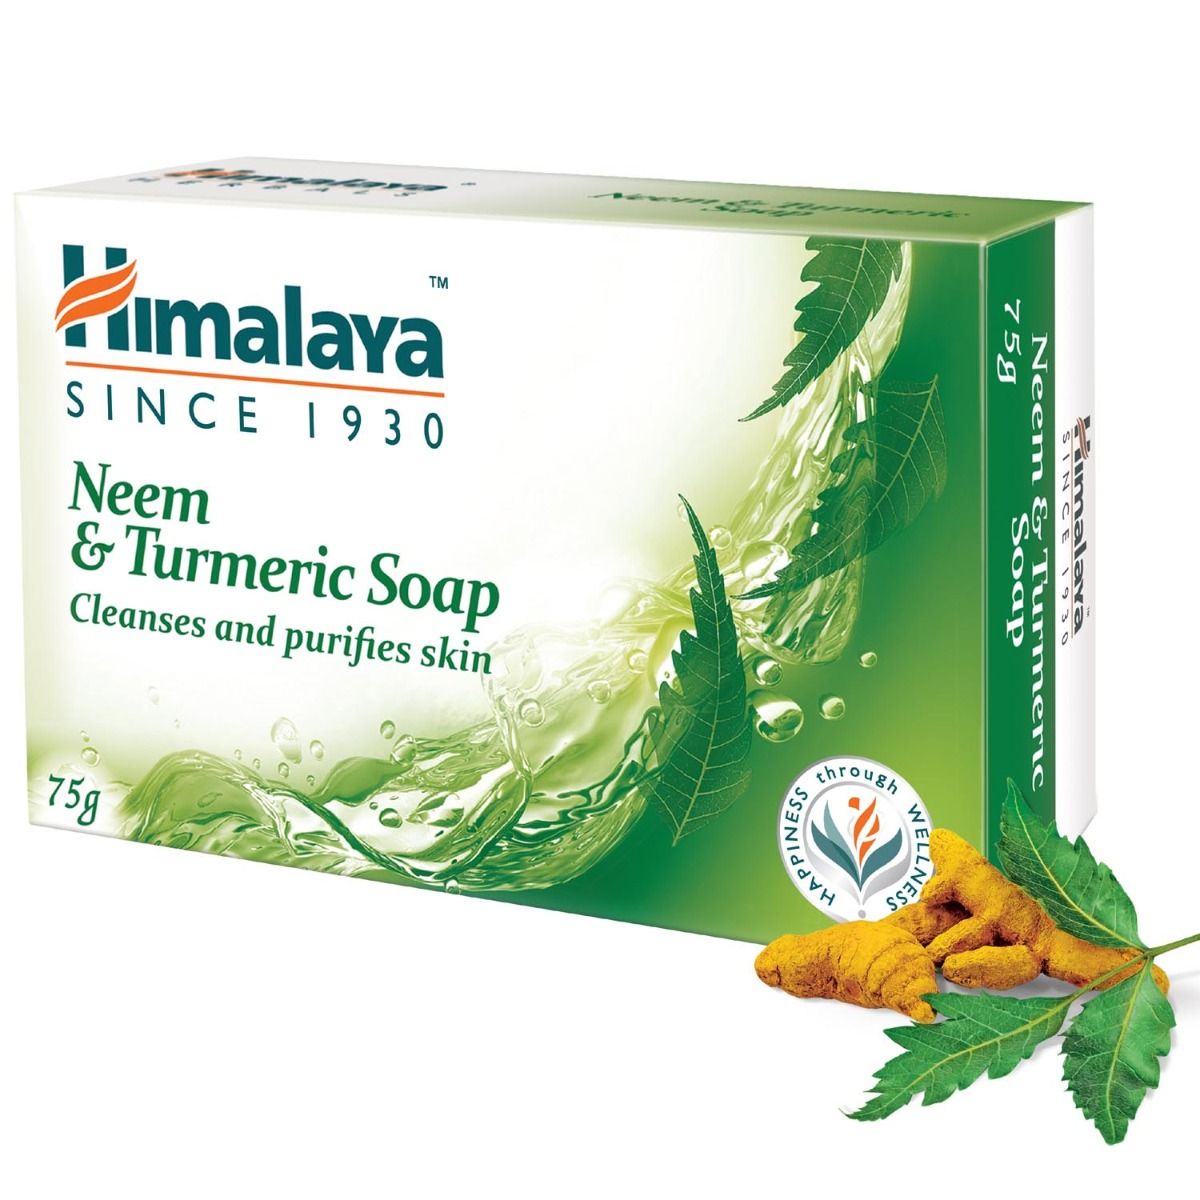 Himalaya Neem &Turmeric Soap, 75 gm, Pack of 1 